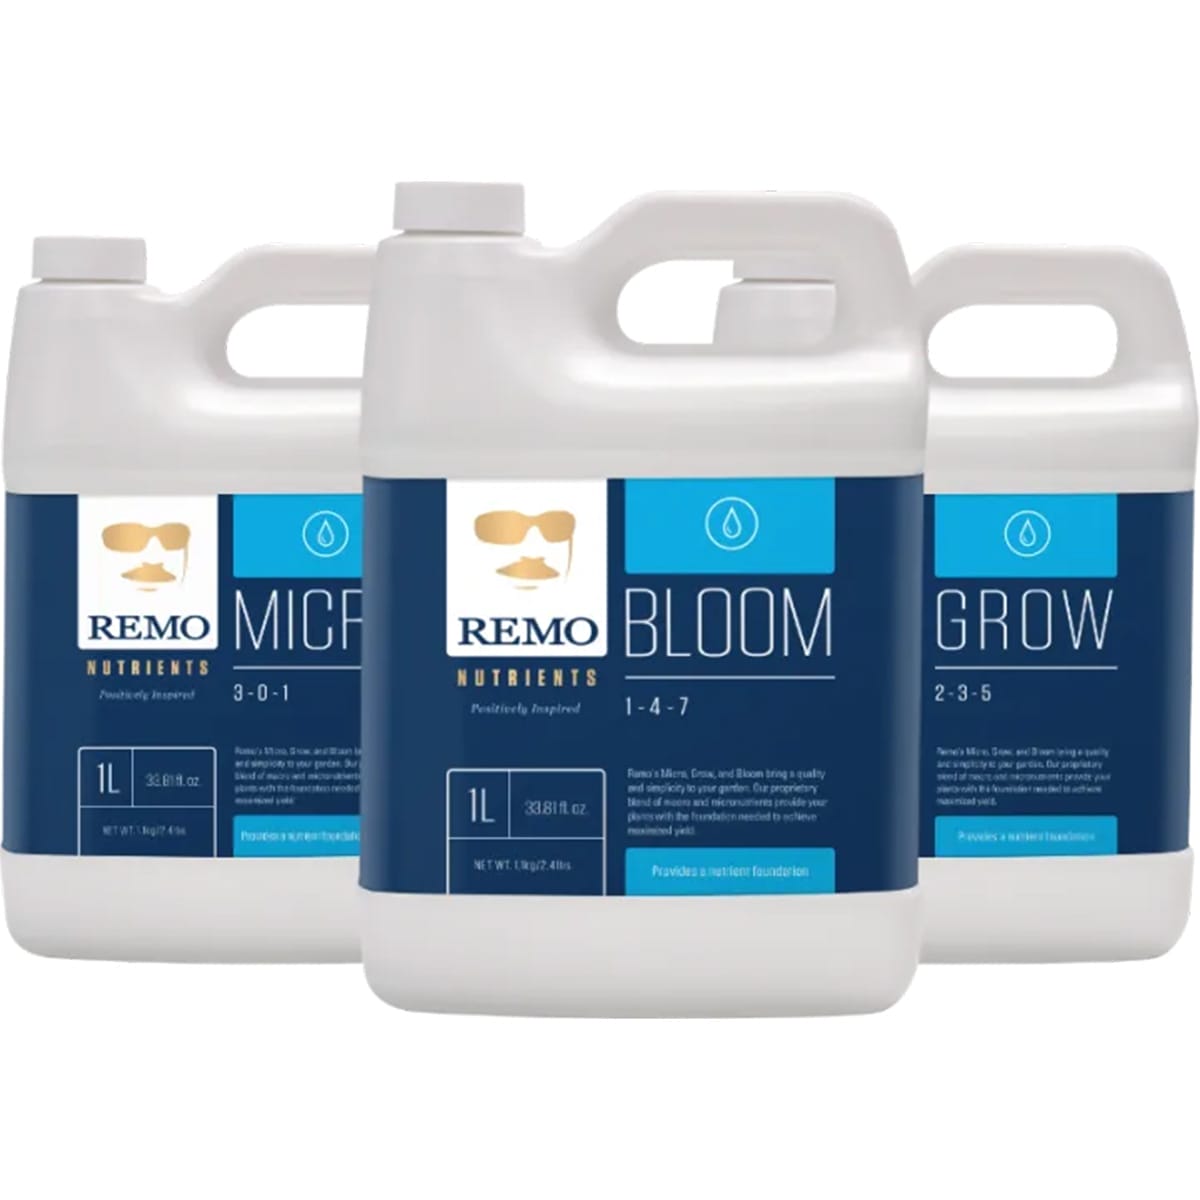 Remo Nutrient Micro Grow Bloom Base Nutrients